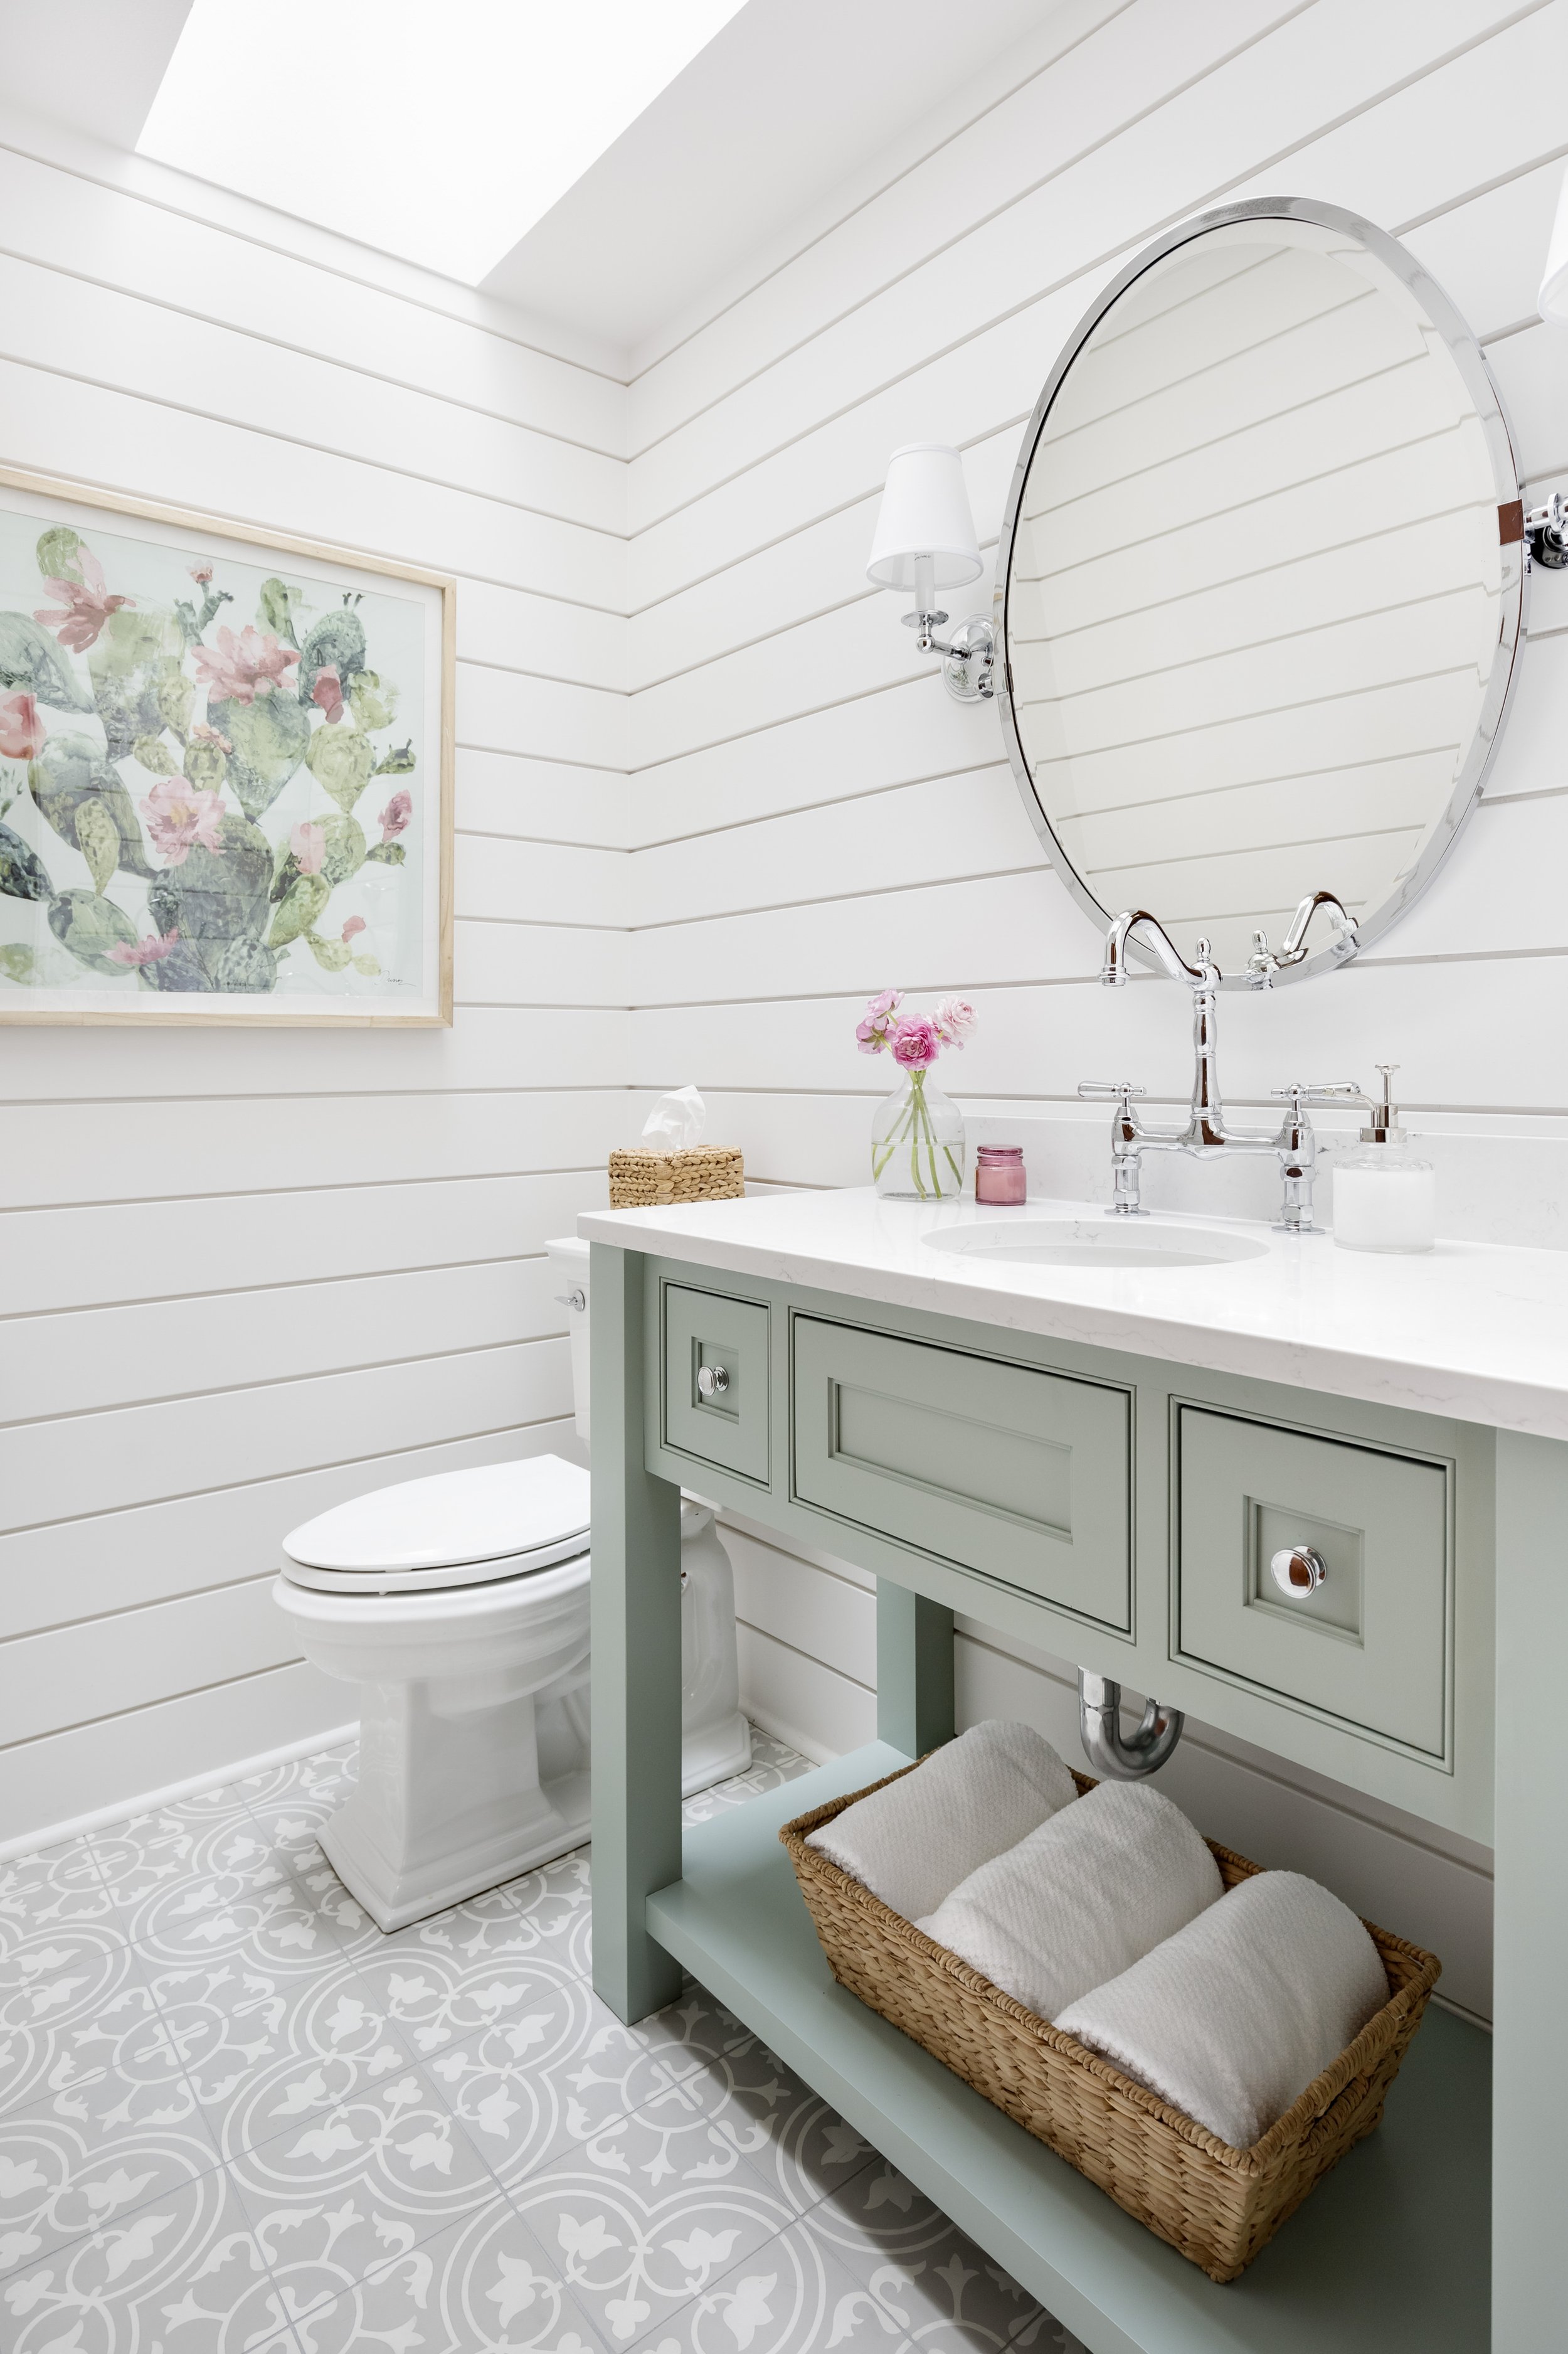 Bathroom interiors designed by Seattle's Kimberlee Marie Interiors